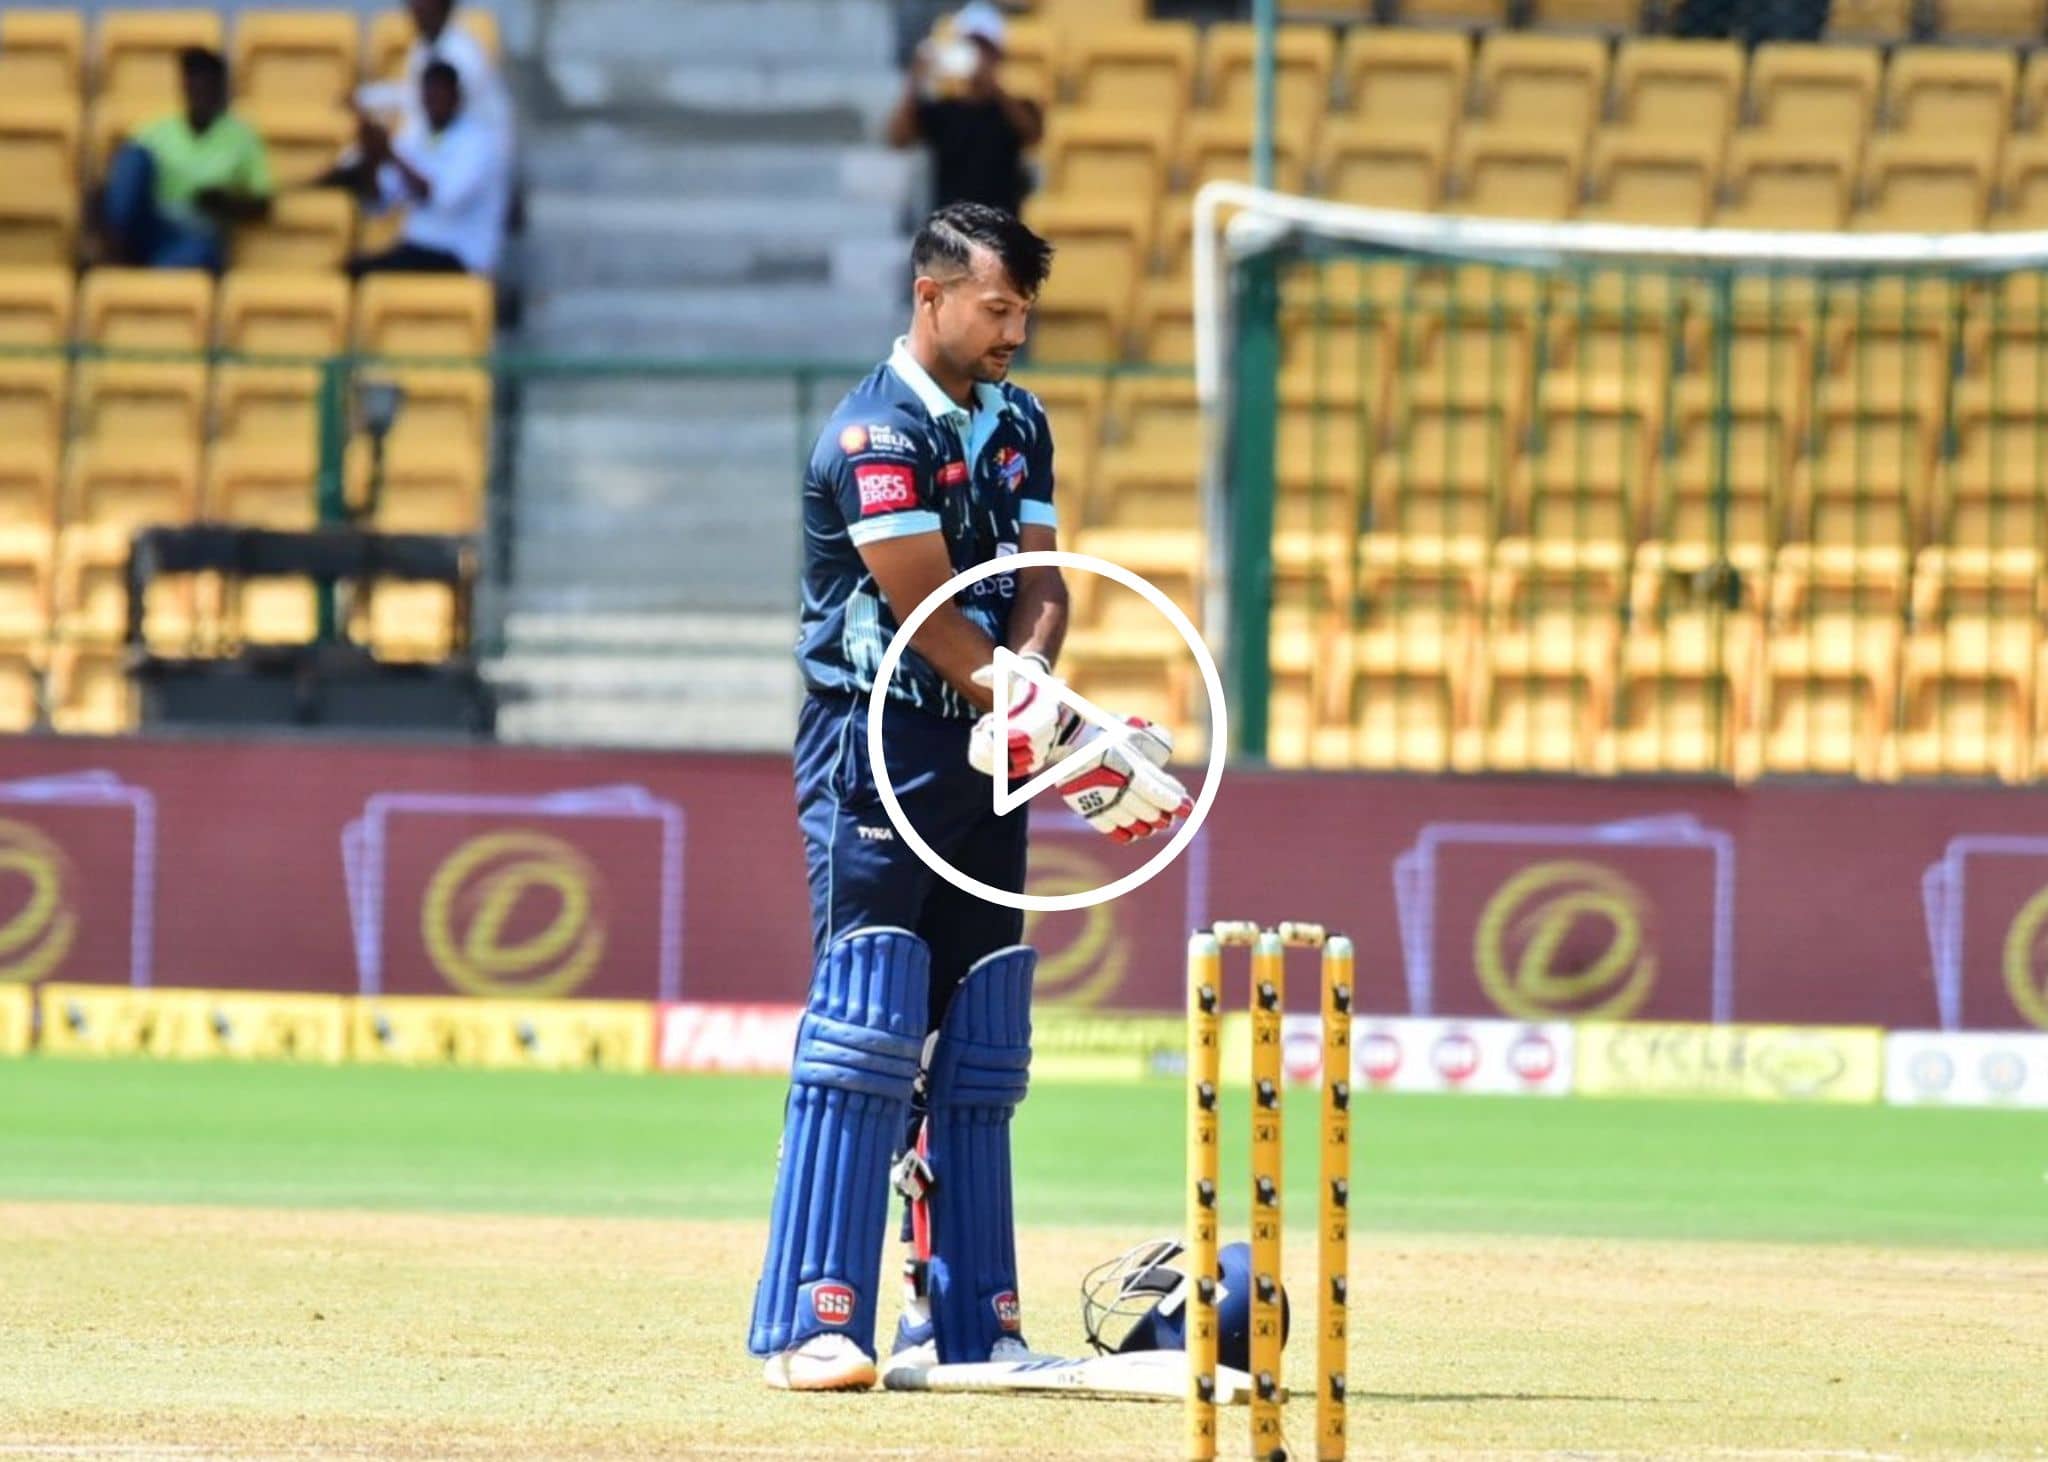 [Watch] Classy Mayank Agarwal Slams ‘Stunning’ Century in Maharaja Trophy T20